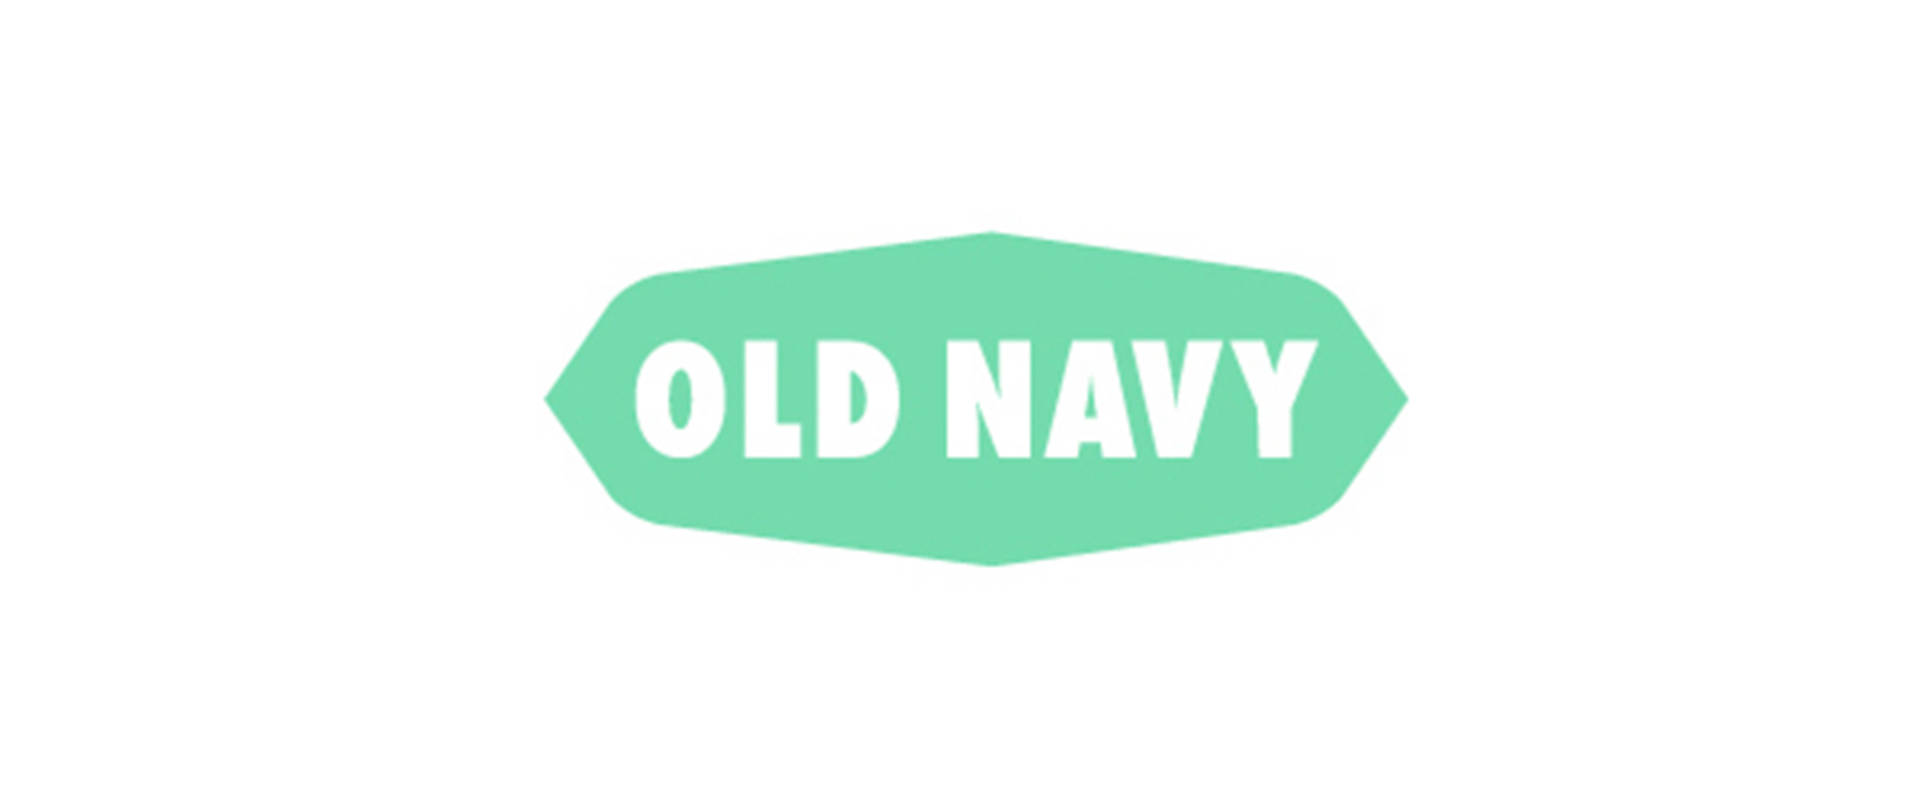 Old Navy Green Logo Design Background